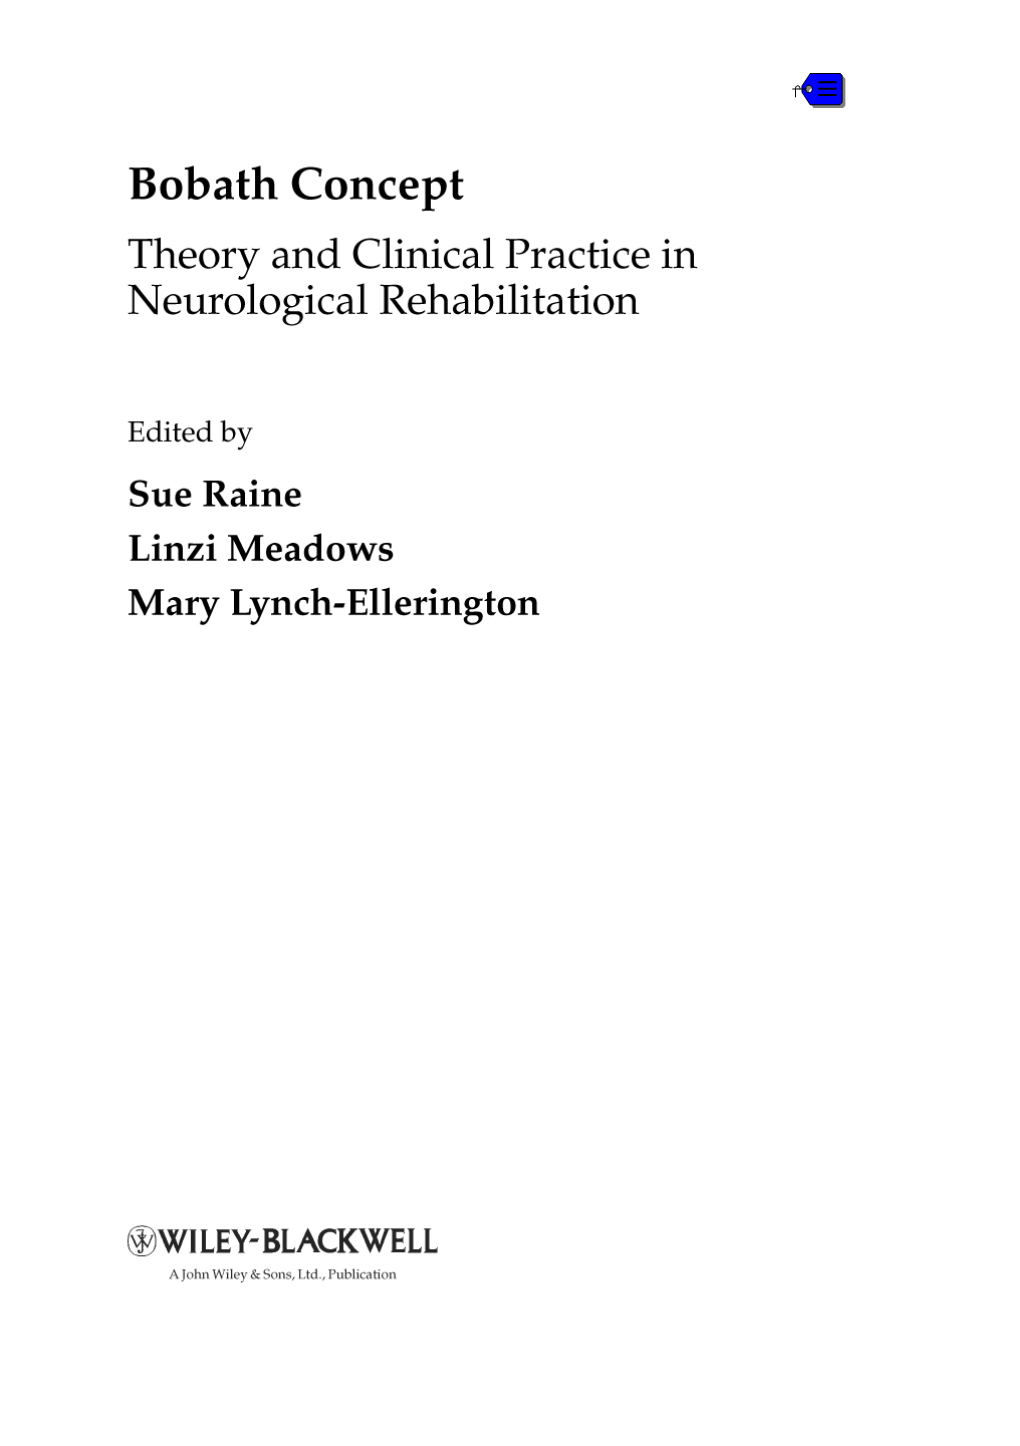 Bobath Concept: Theory and Clinical Practice in Neurological Rehabilitation / Edited by Sue Raine, Linzi Meadows, Mary Lynch-Ellerington